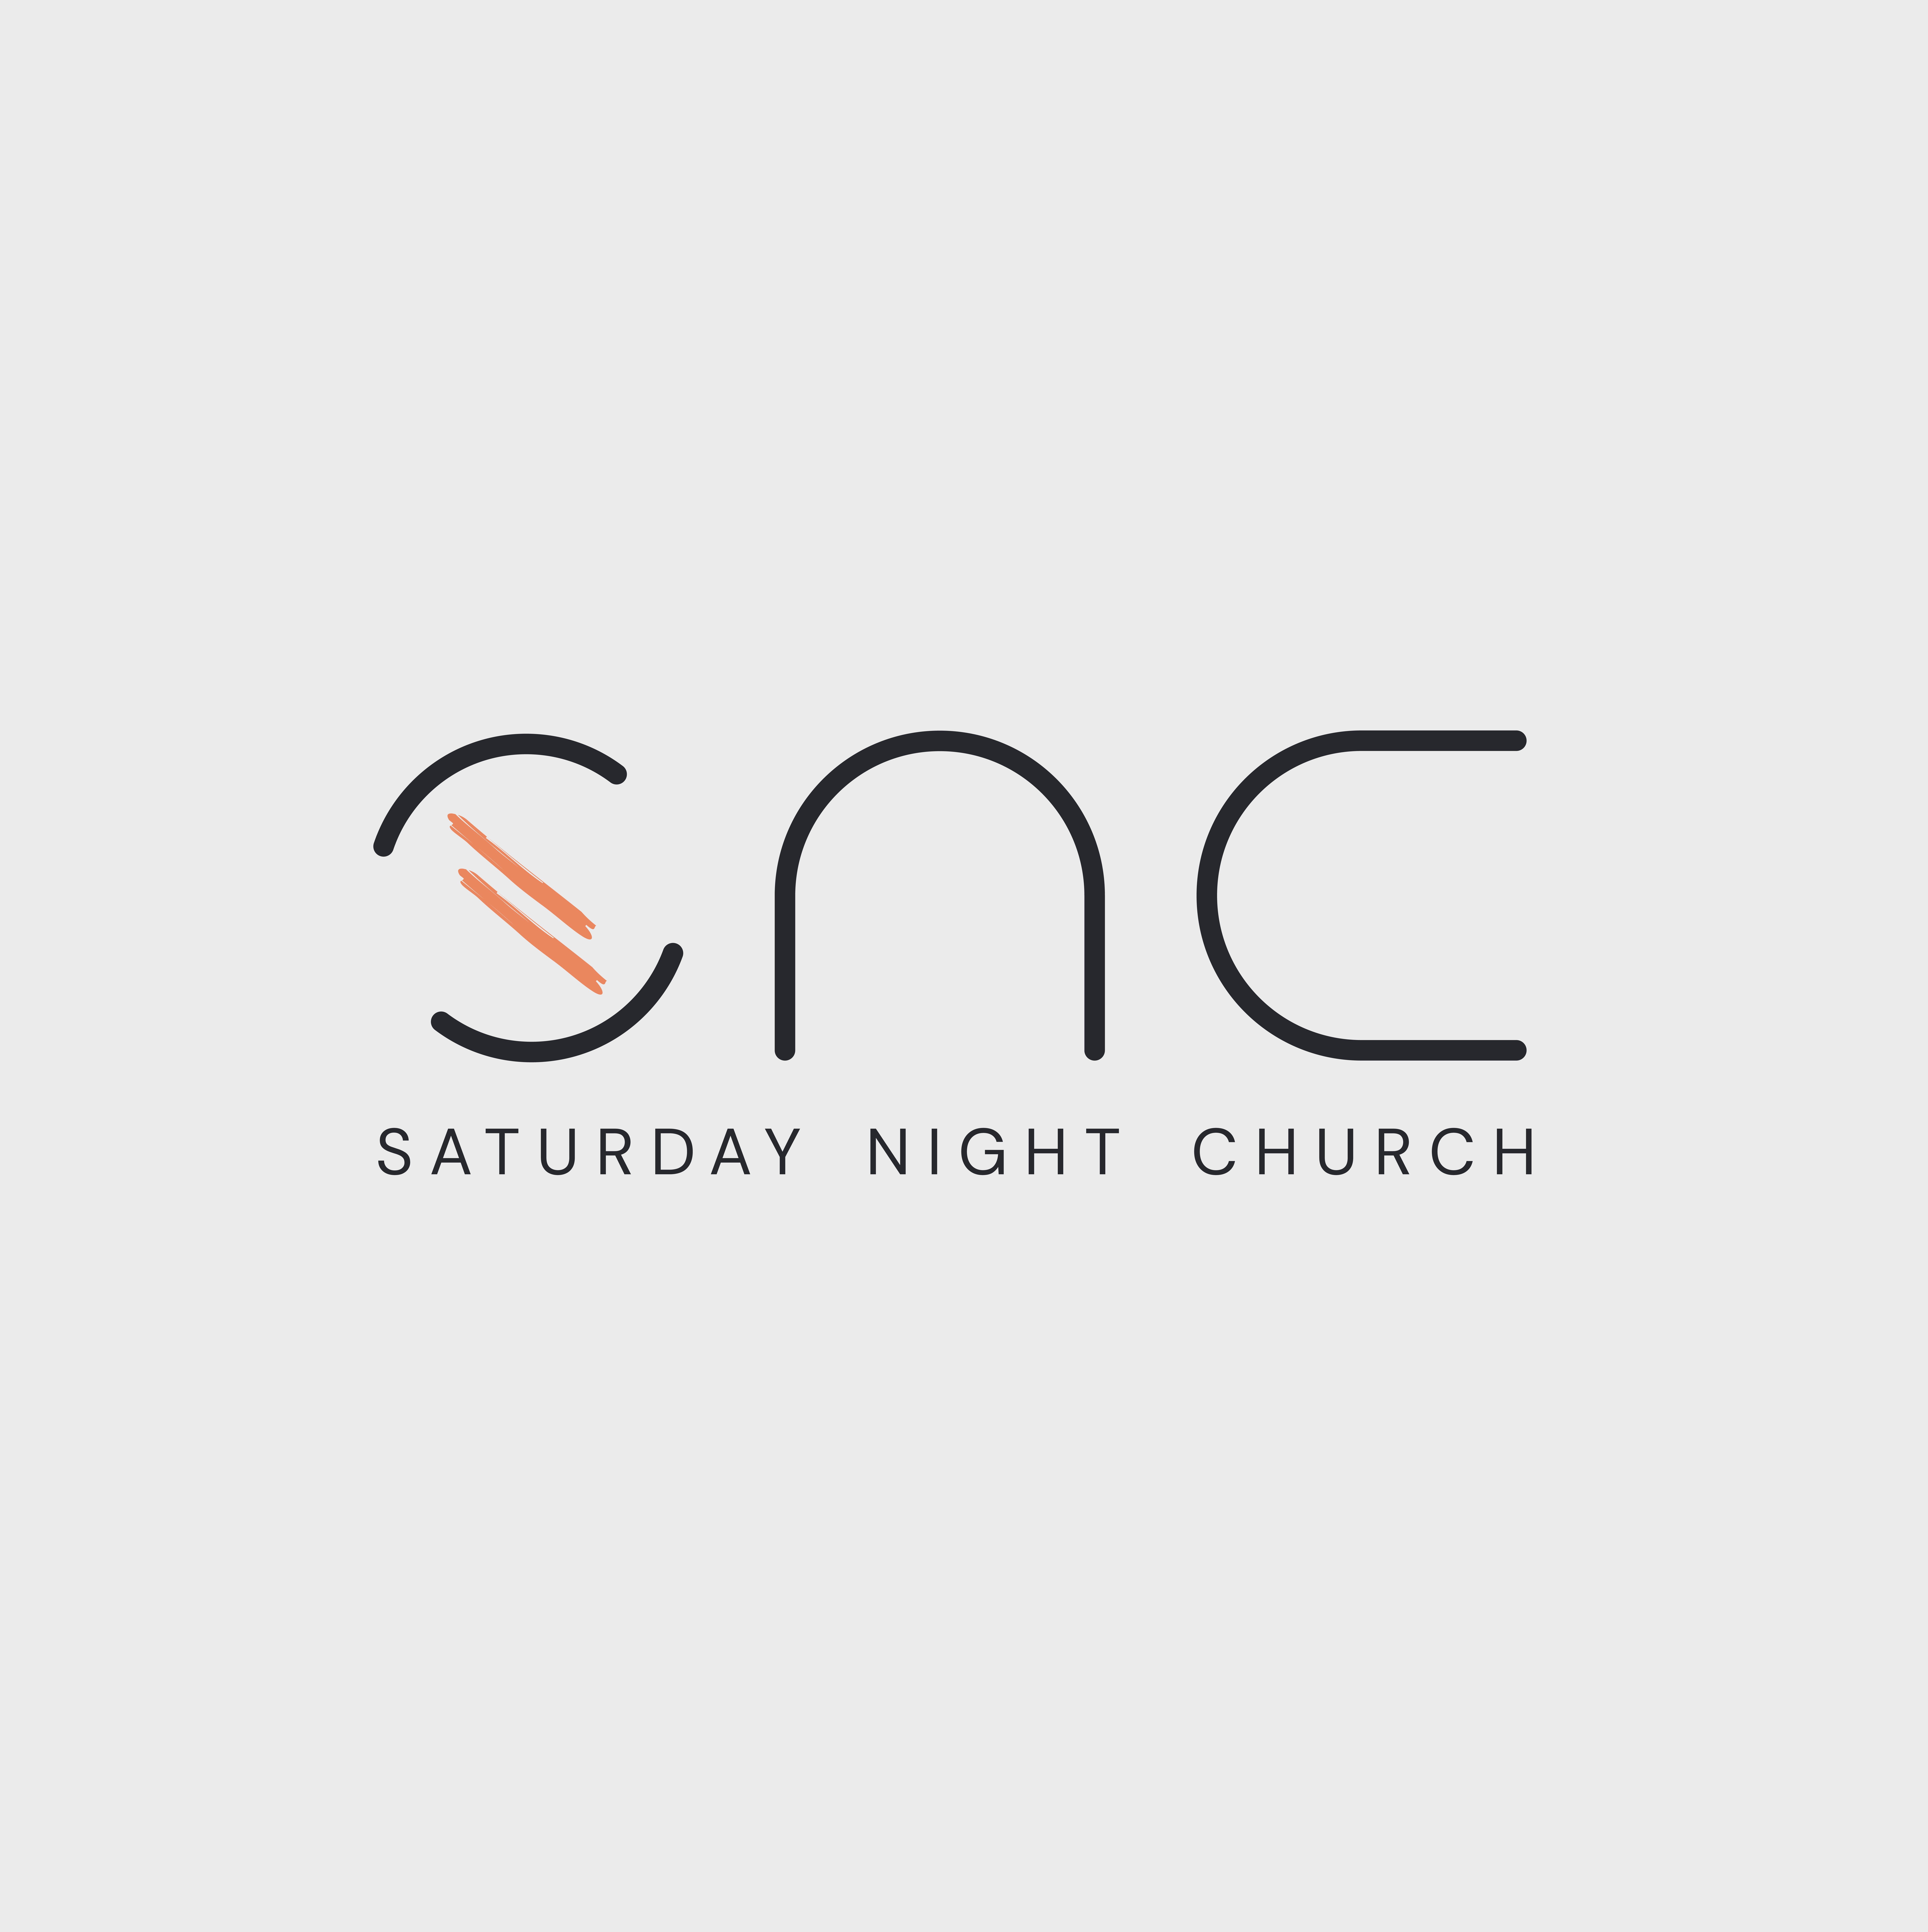 Saturday Night Church (SNC)